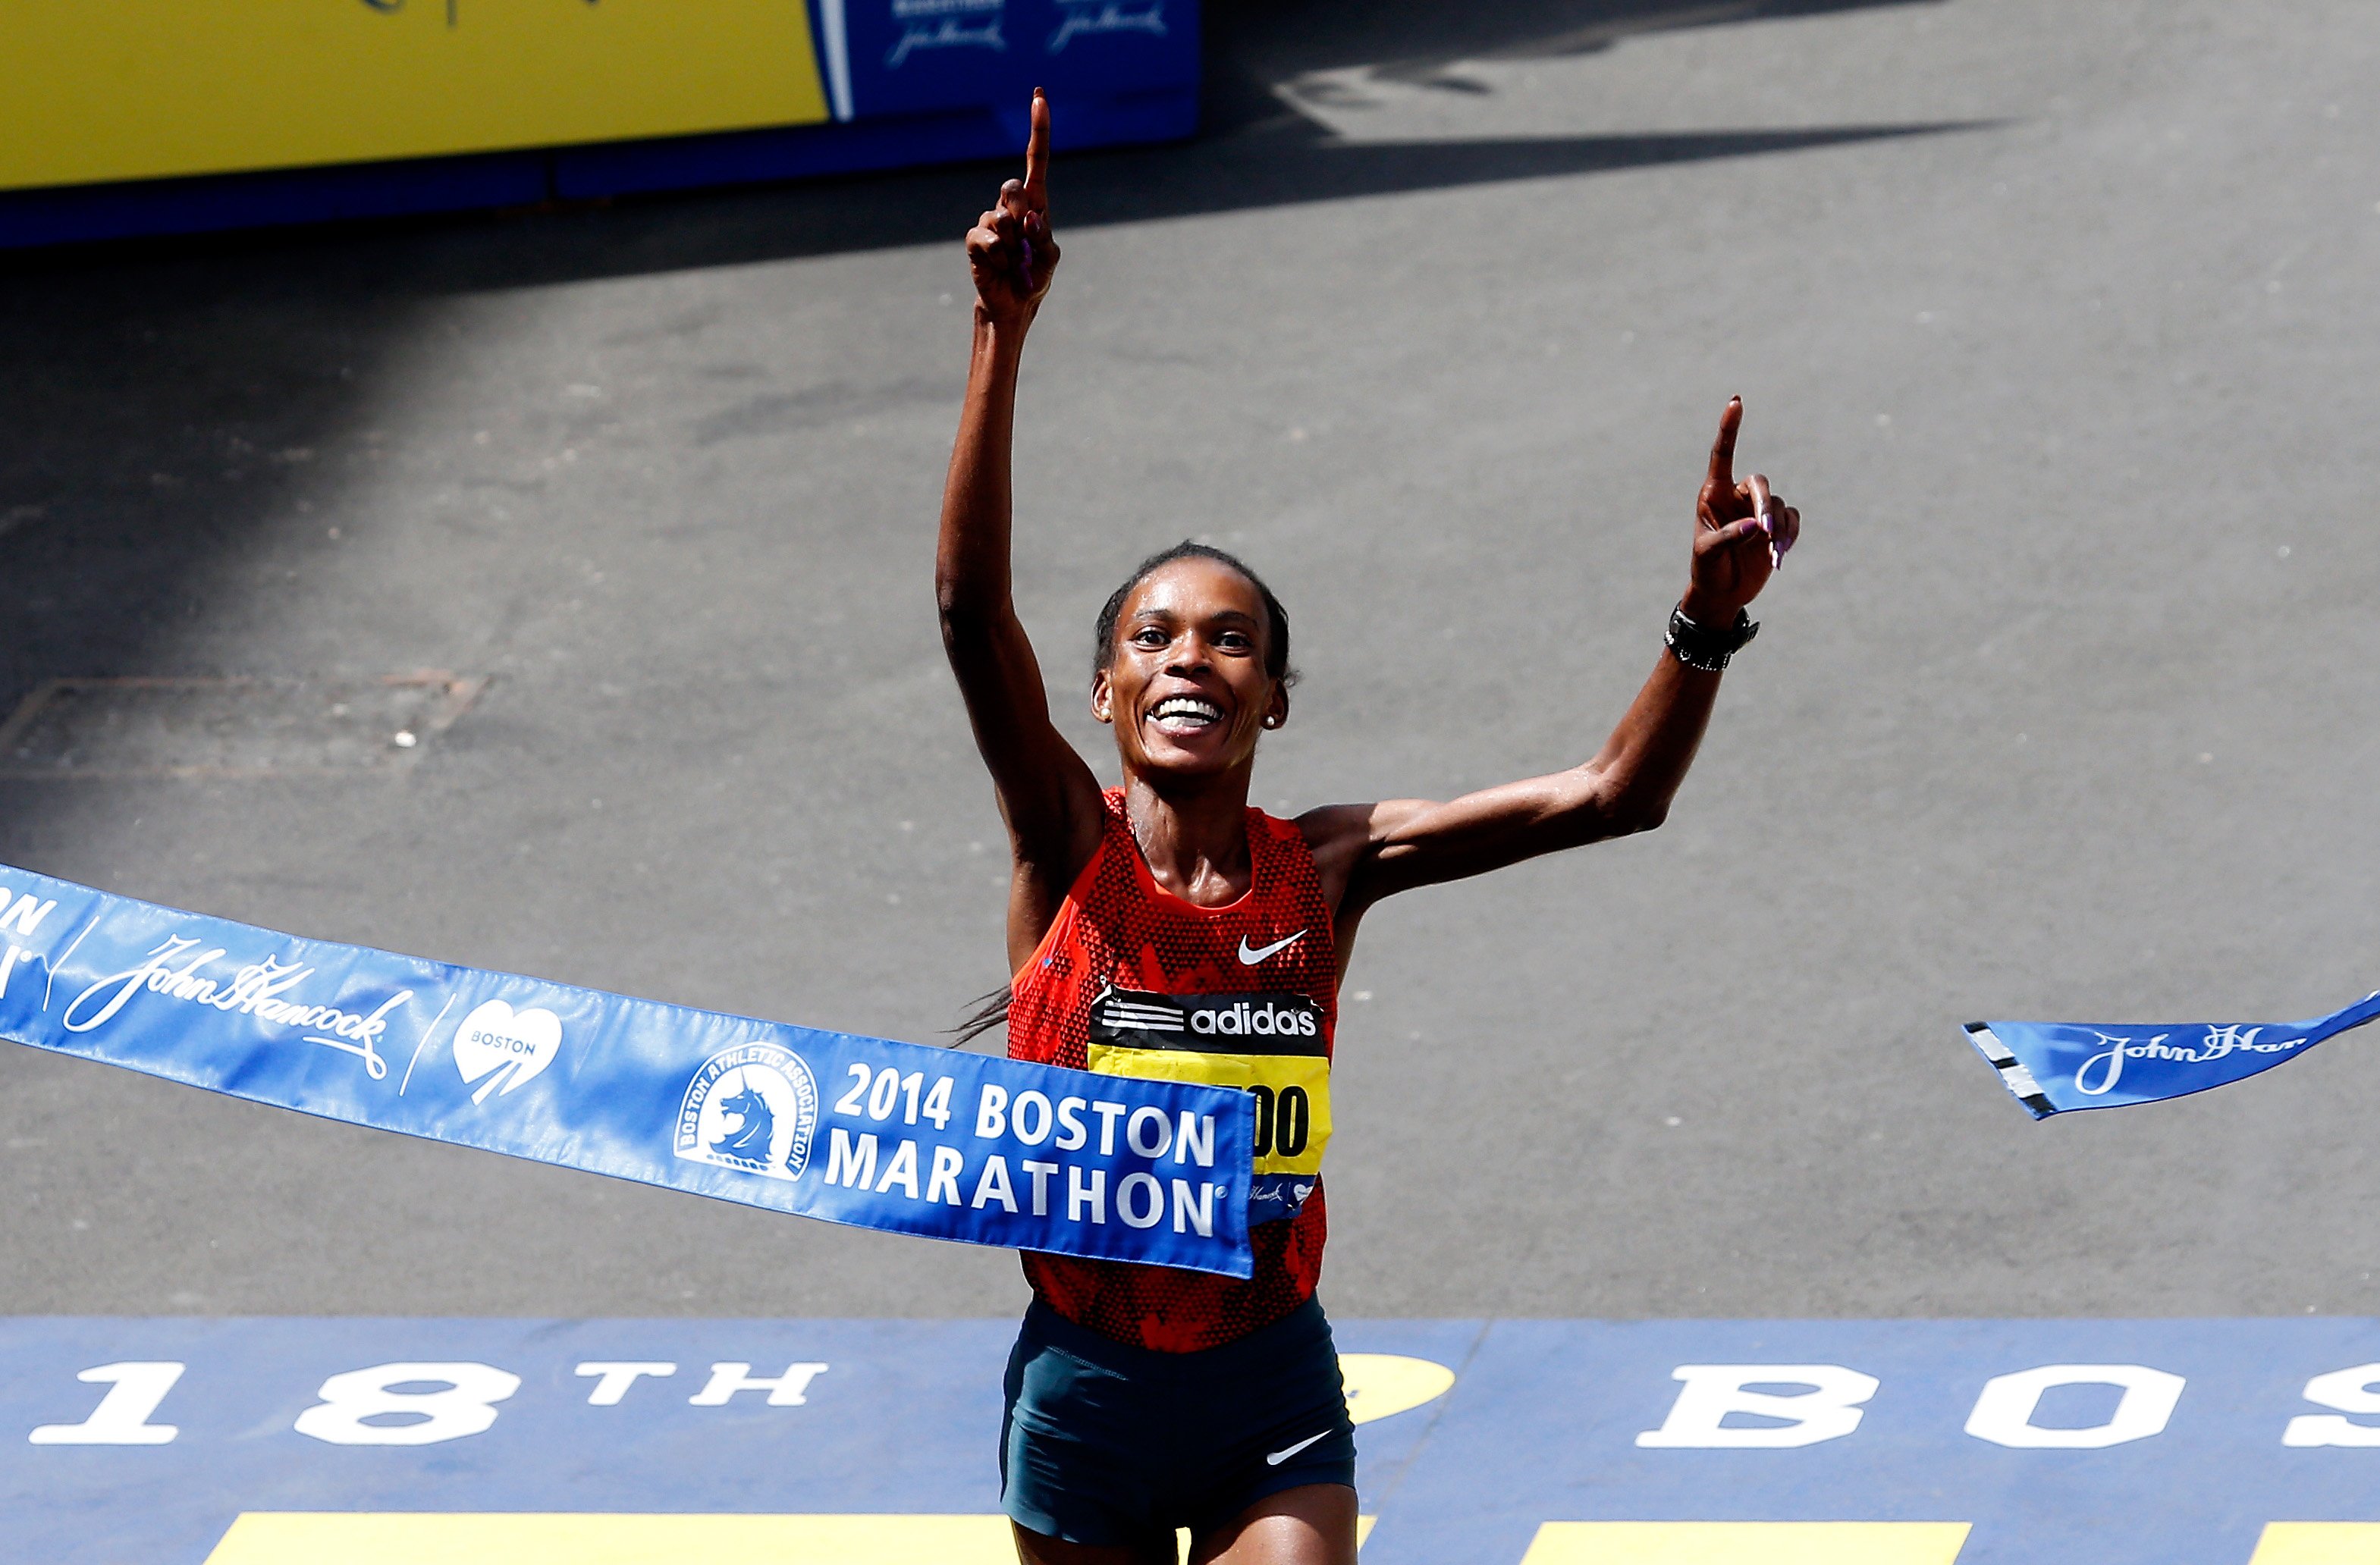 Rita Jeptoo of Kenya crosses the finish line to win the 118th Boston Marathon on April 21, 2014 in Boston, Ma. (Jim Rogash—Getty Images)